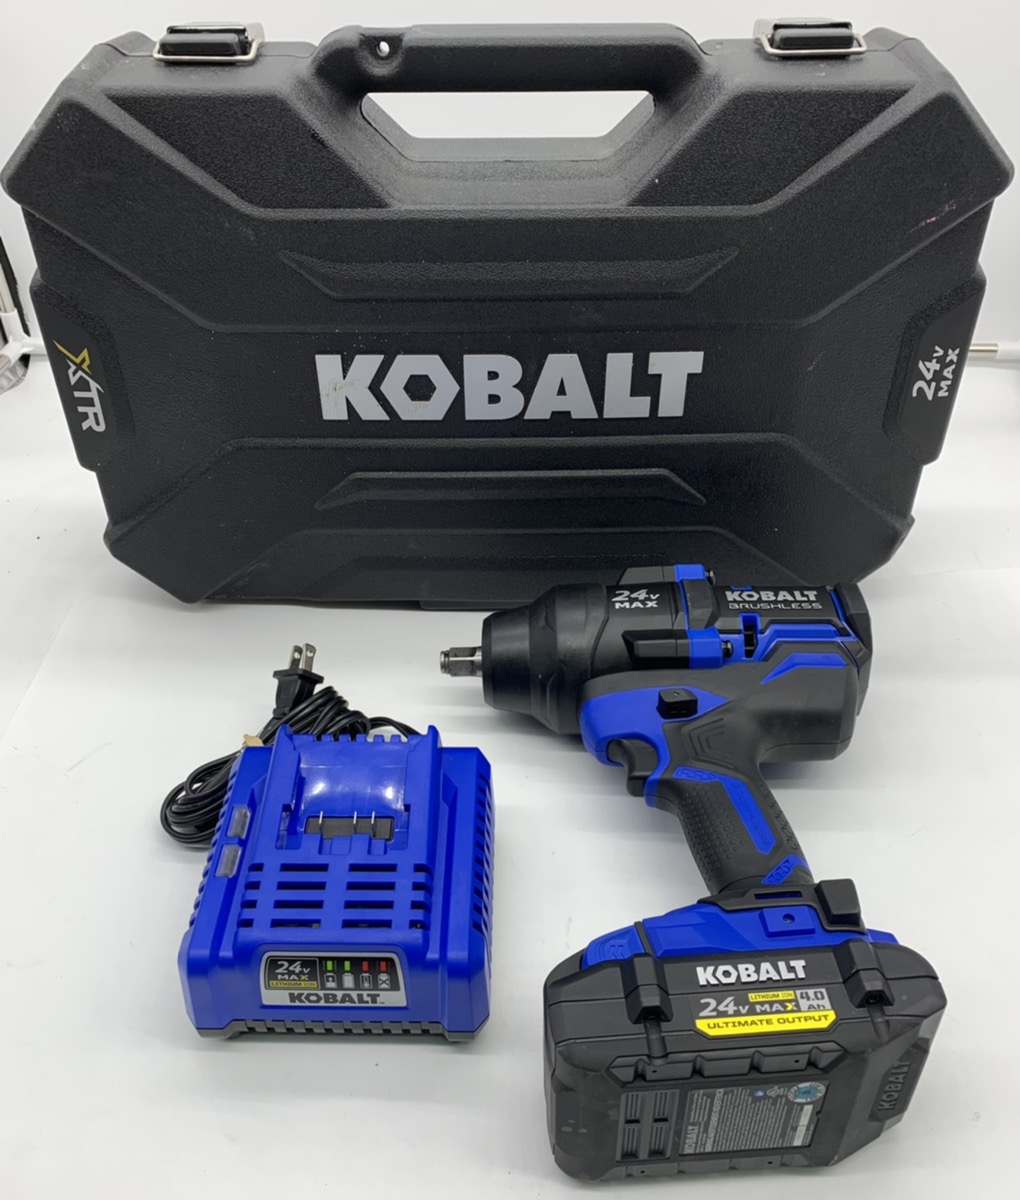 Kobalt Tools Kxiw 124b 03 24v 1 2 Electric Impact Wrench Kit W Case